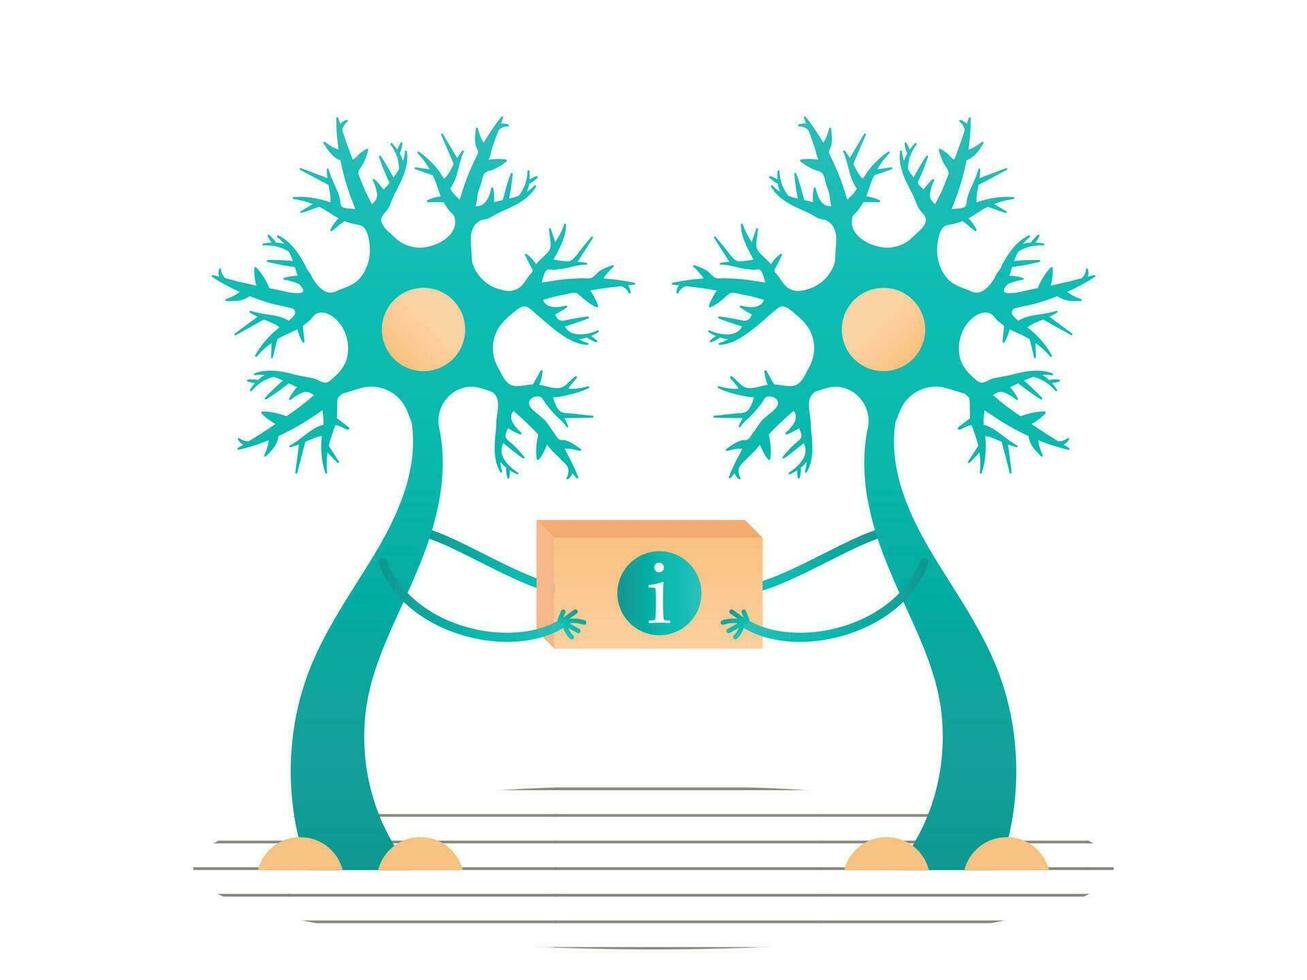 Neuron and brain vector illustration